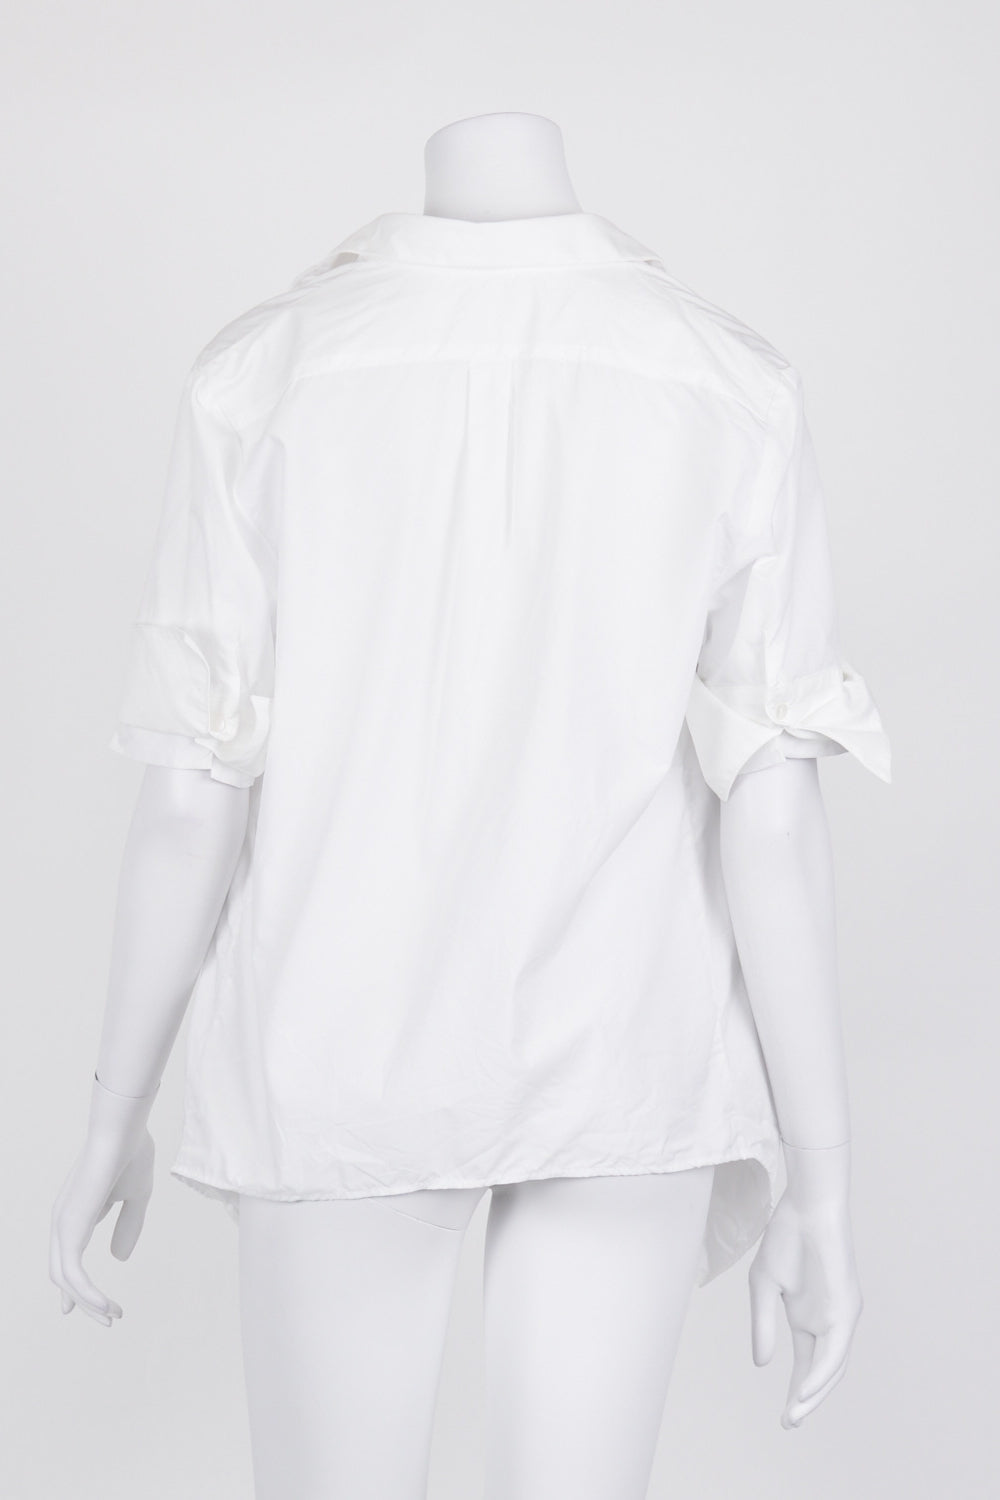 White Story White Button-Up Cuffed Shirt 14